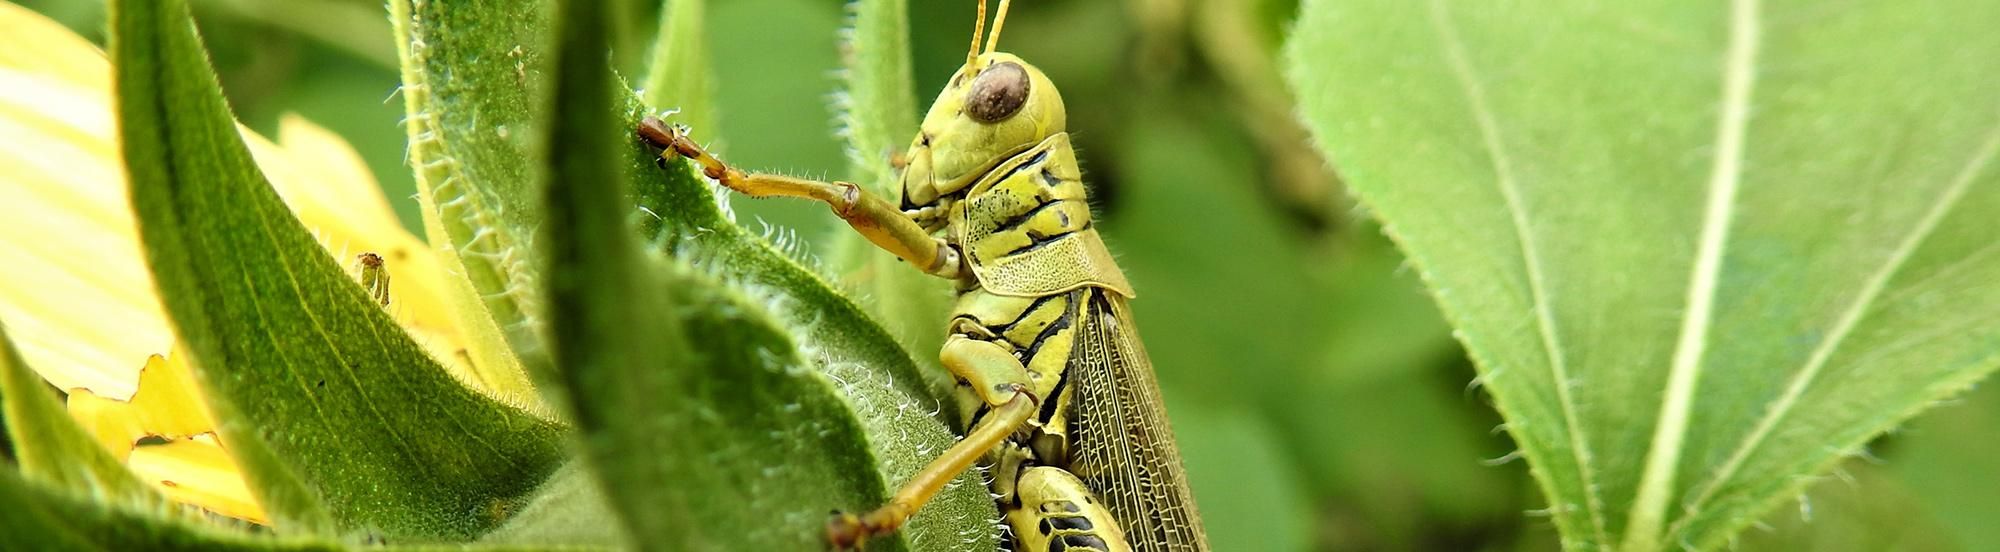 grasshopper crawling on plants